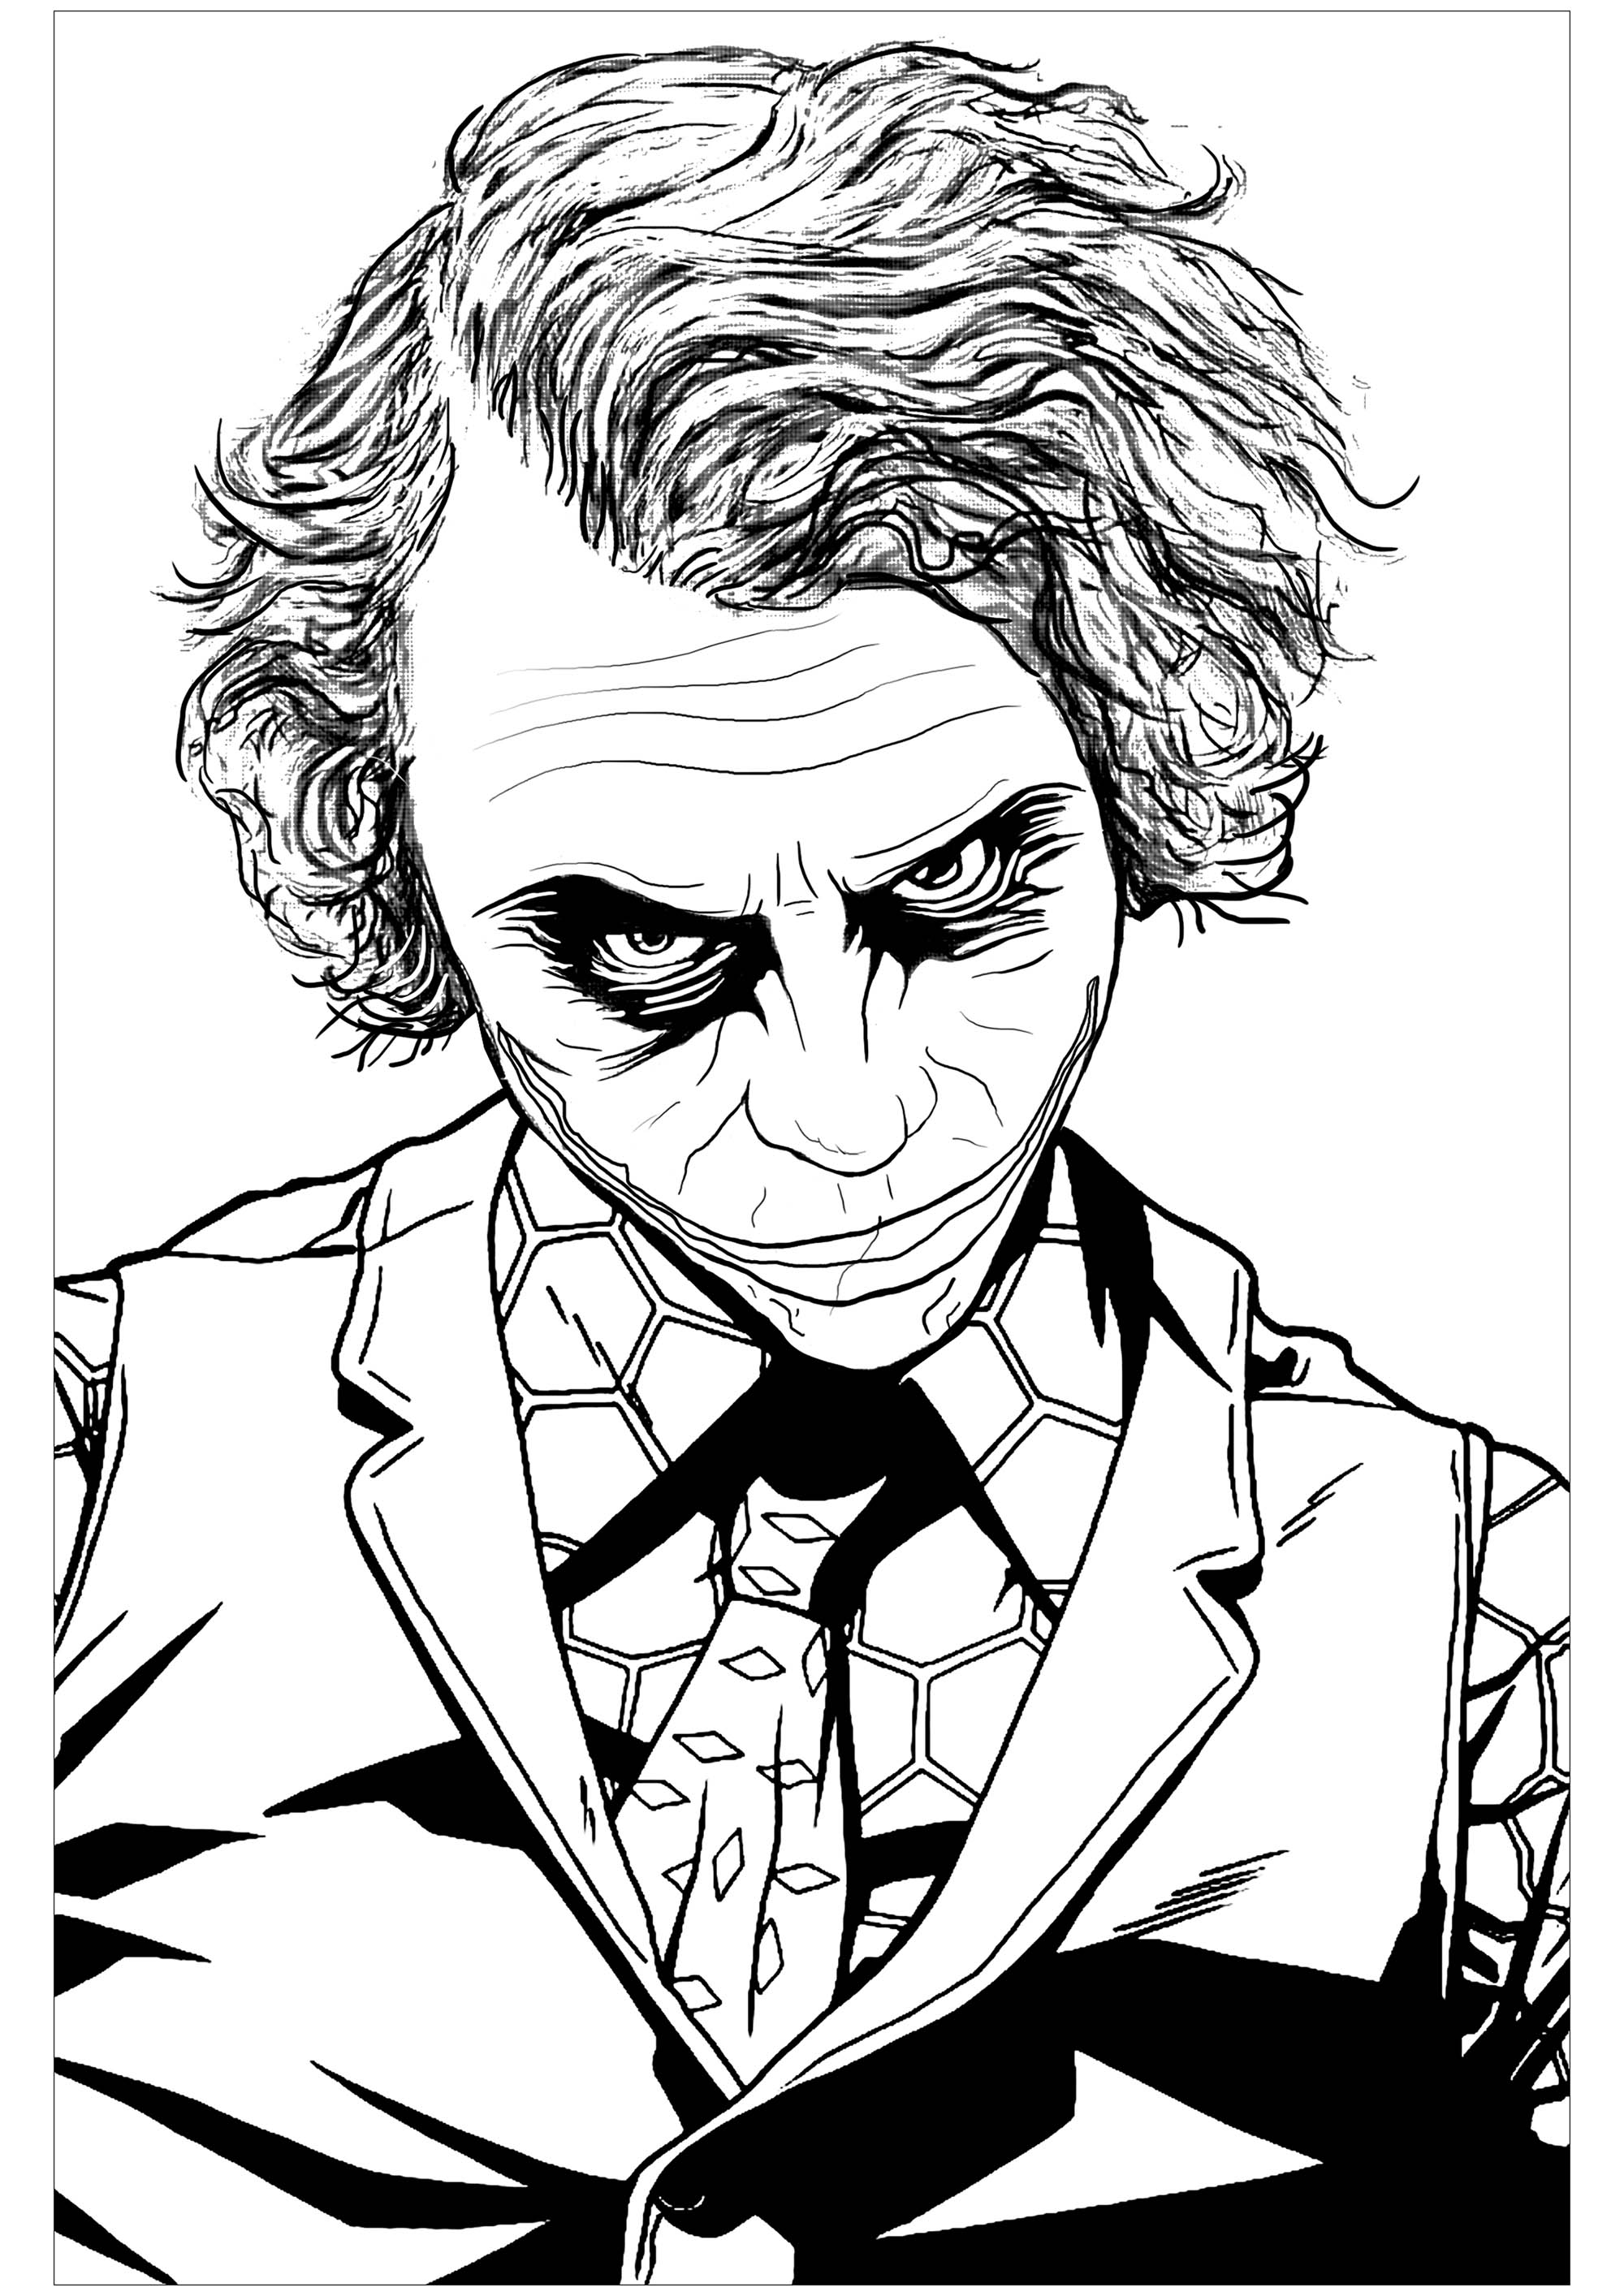 O Joker (Heath Ledger)